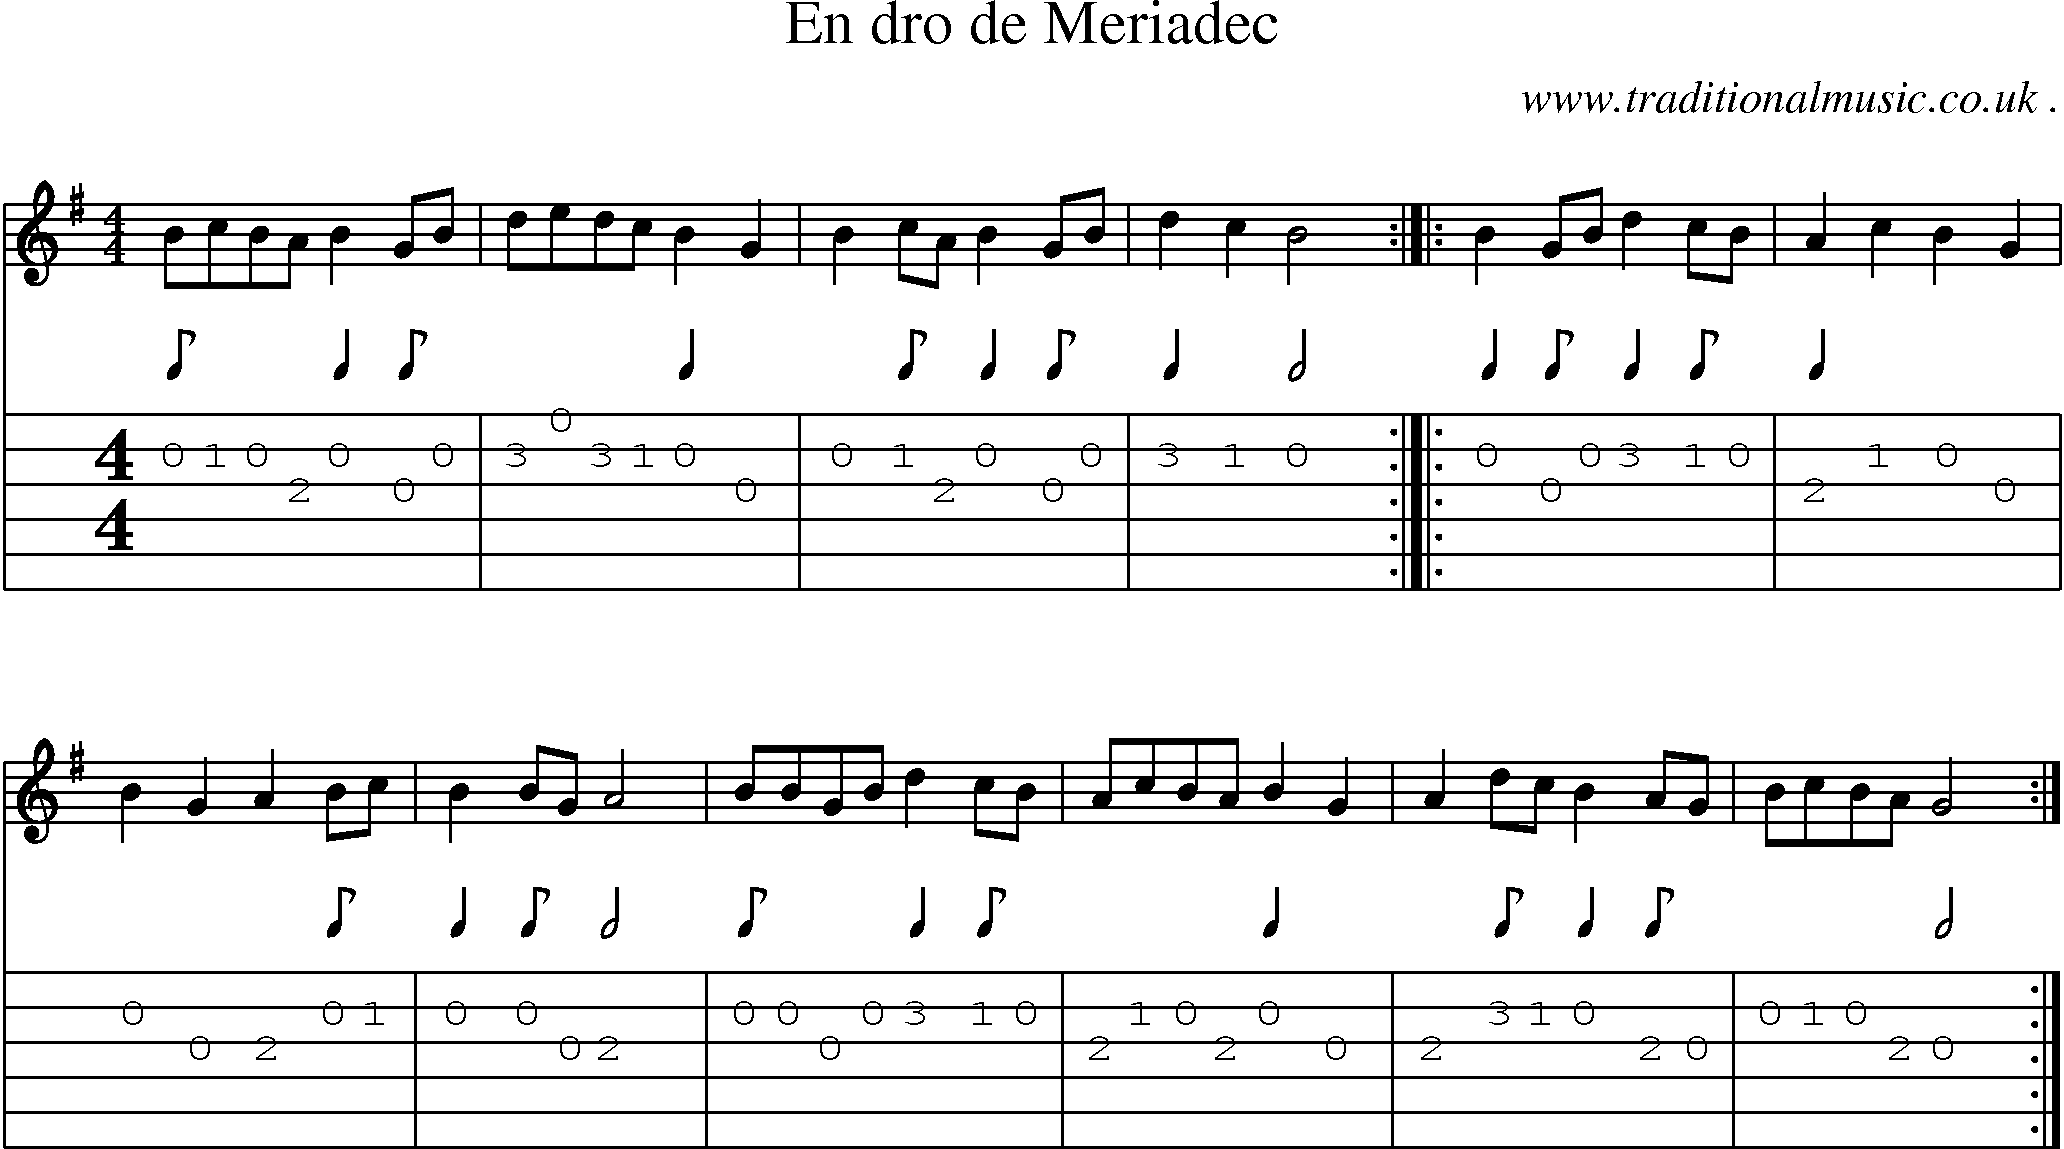 Sheet-Music and Guitar Tabs for En Dro De Meriadec